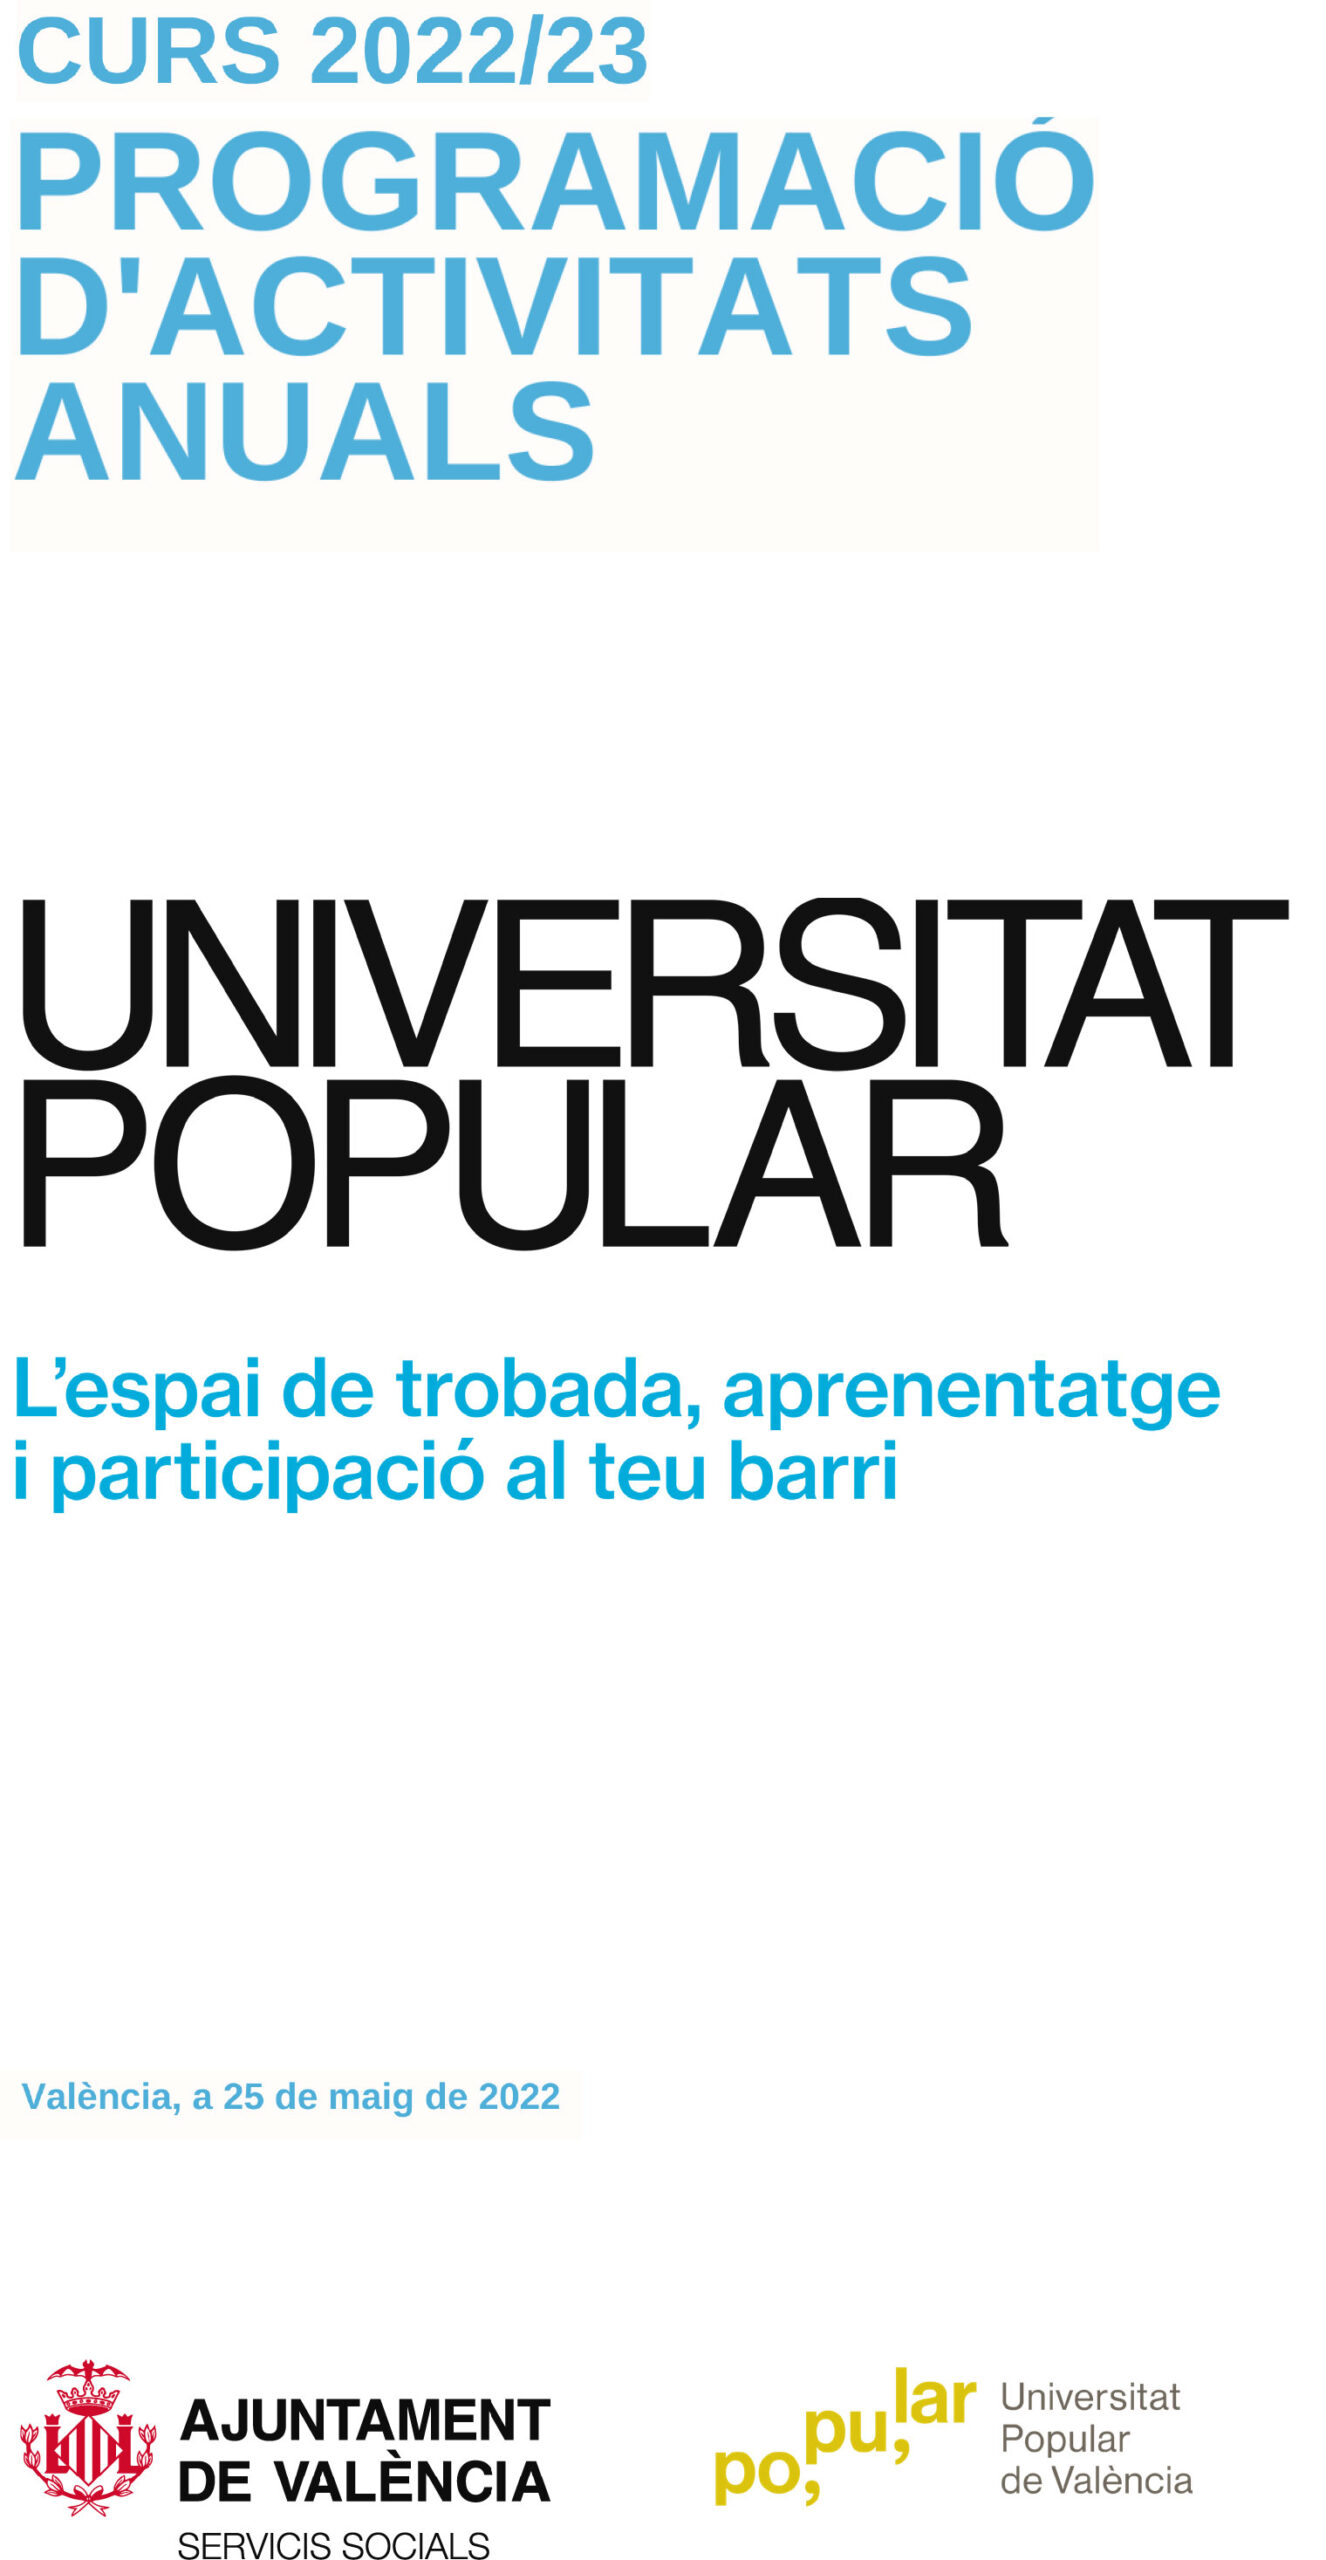 (c) Universitatpopular.com